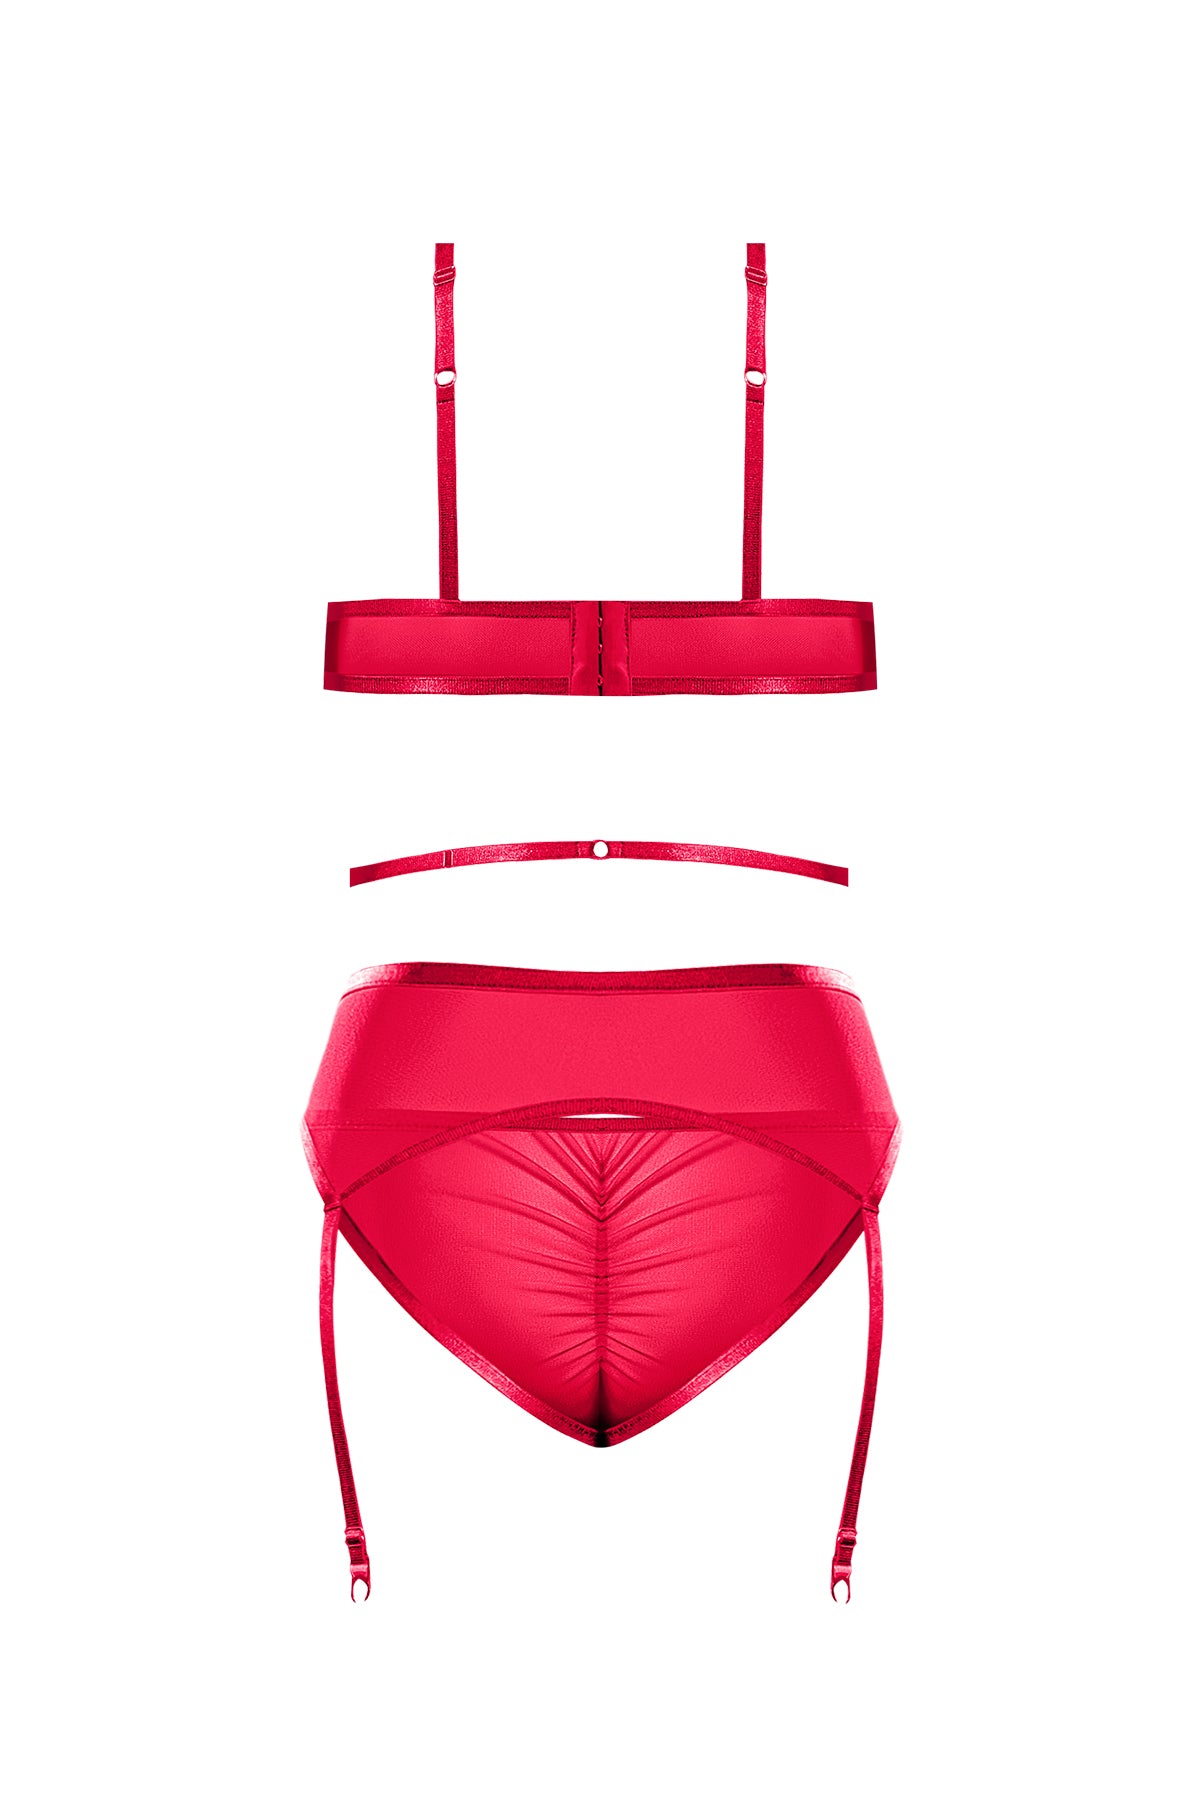 Magic Silk Sheer Mesh Bra Garter Belt & Panty Set Red - Romantic Blessings